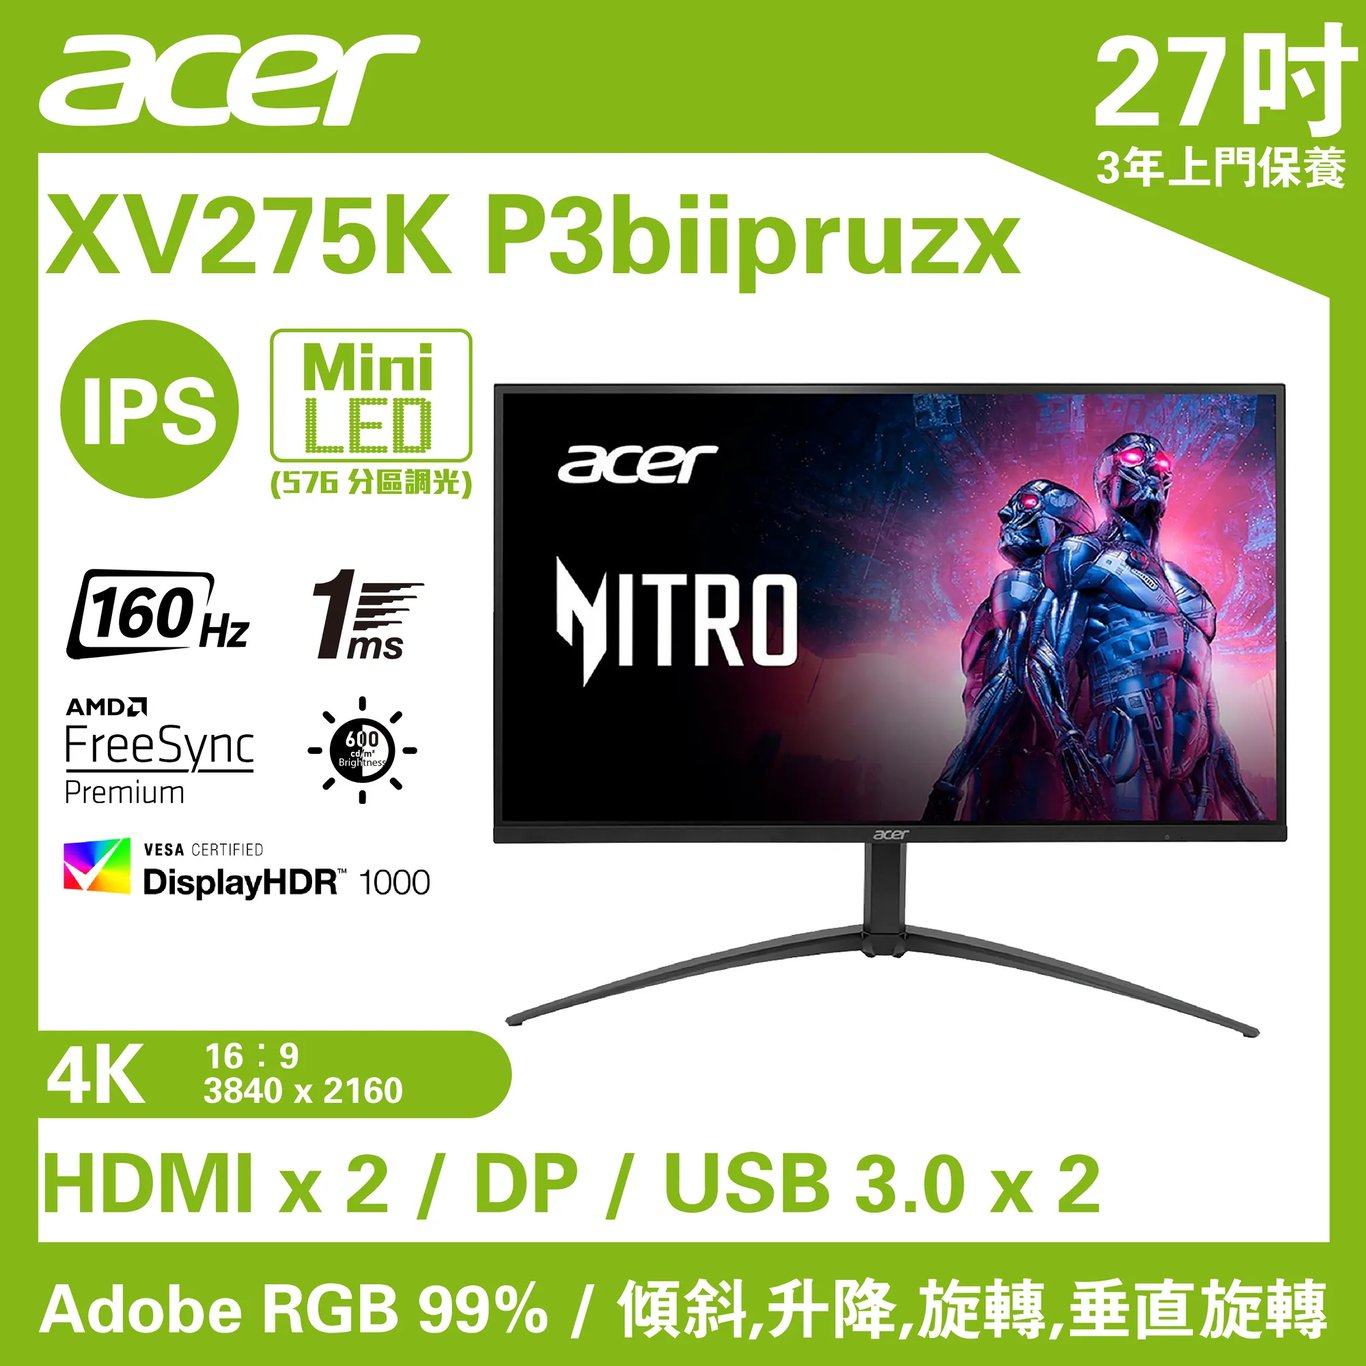 【門市自取/砌機加購減$100】 Acer NITRO XV275K P3biipruzx 電競顯示器 (27吋 / 4K UHD / 160Hz / IPS / MiniLED / Type-C 90W / DisplayHDR 1000 / FreeSync Premium ) - 3840 x 2160